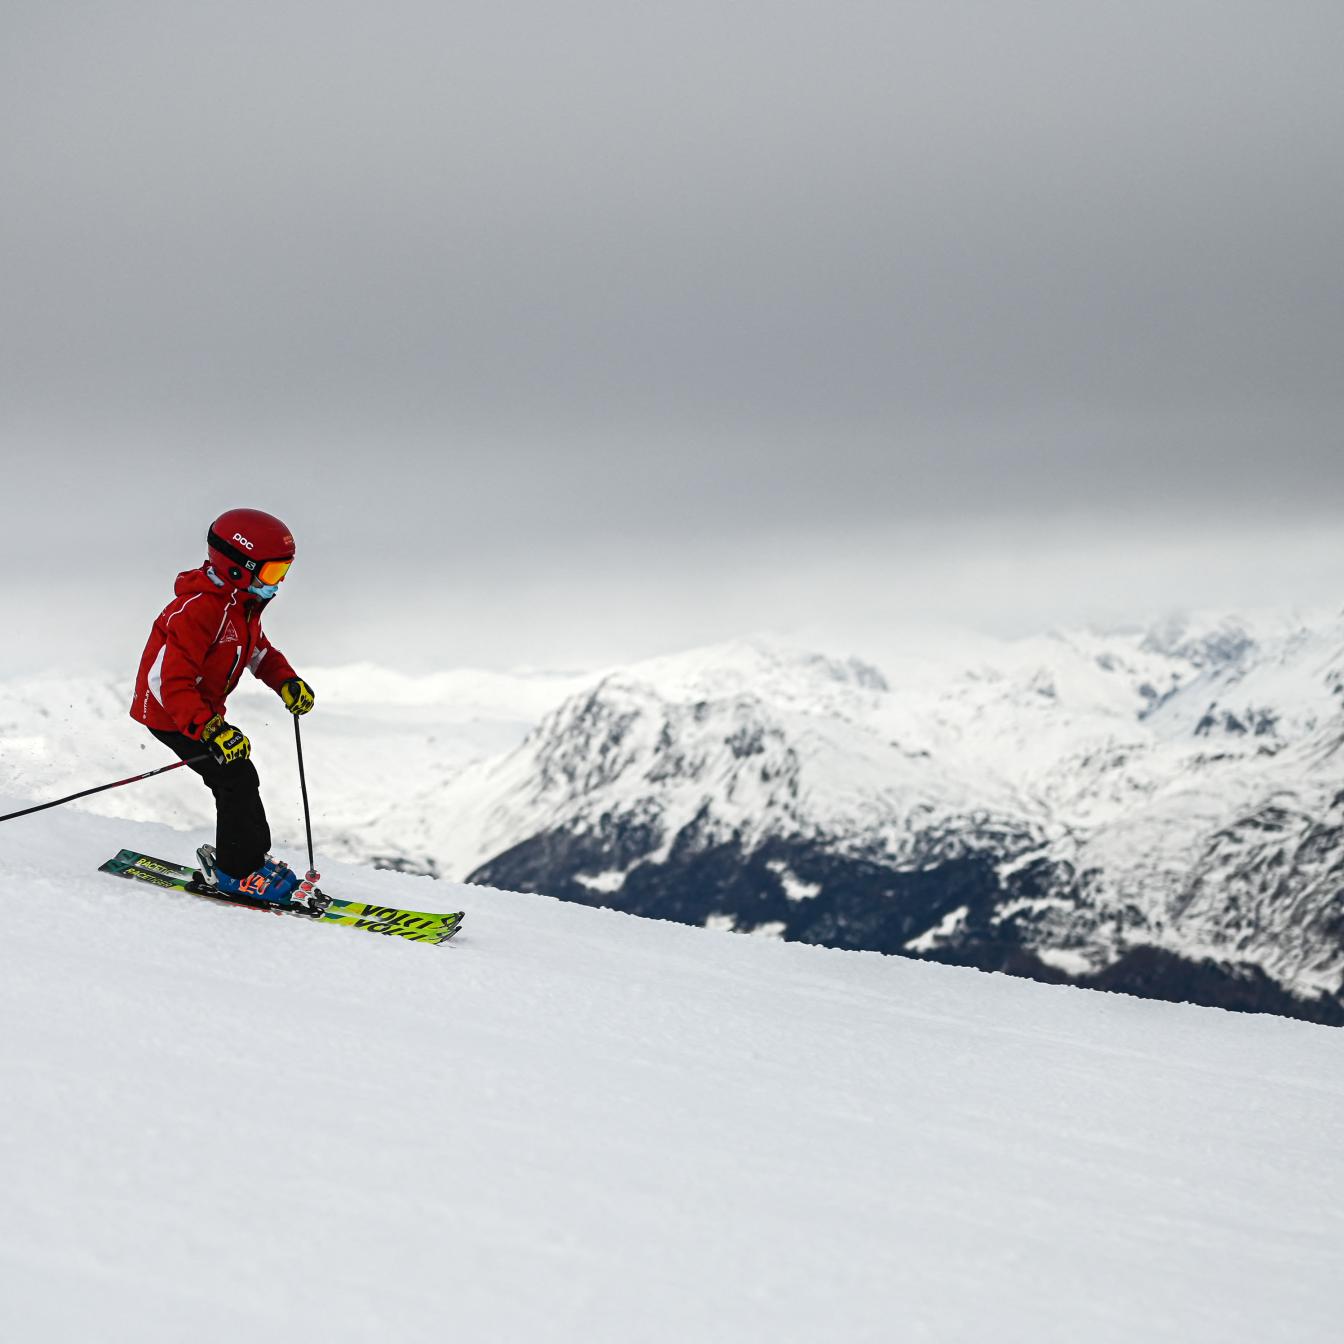 A child skis as ski resorts